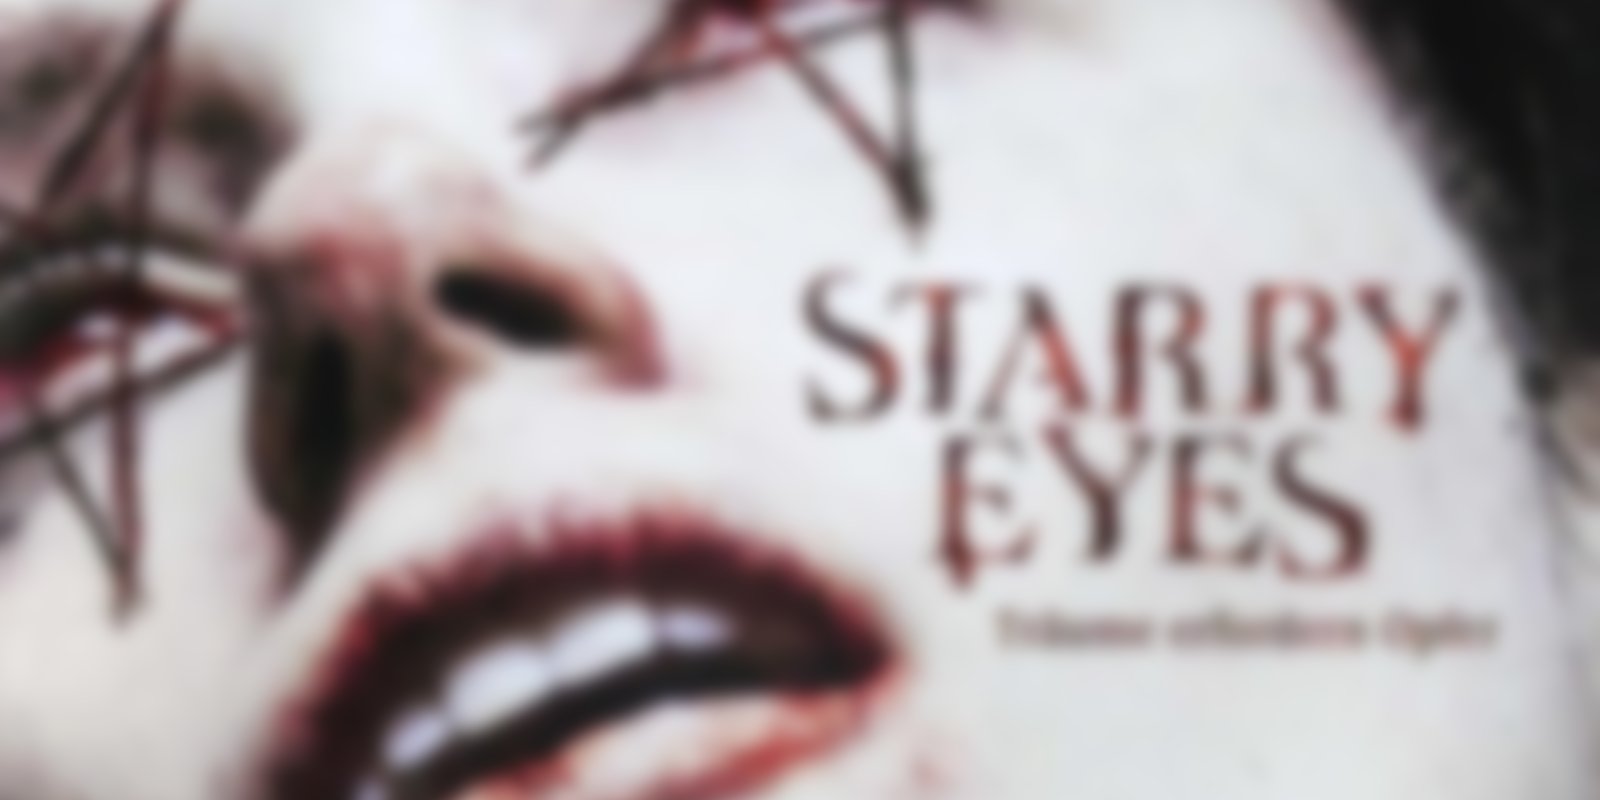 Starry Eyes